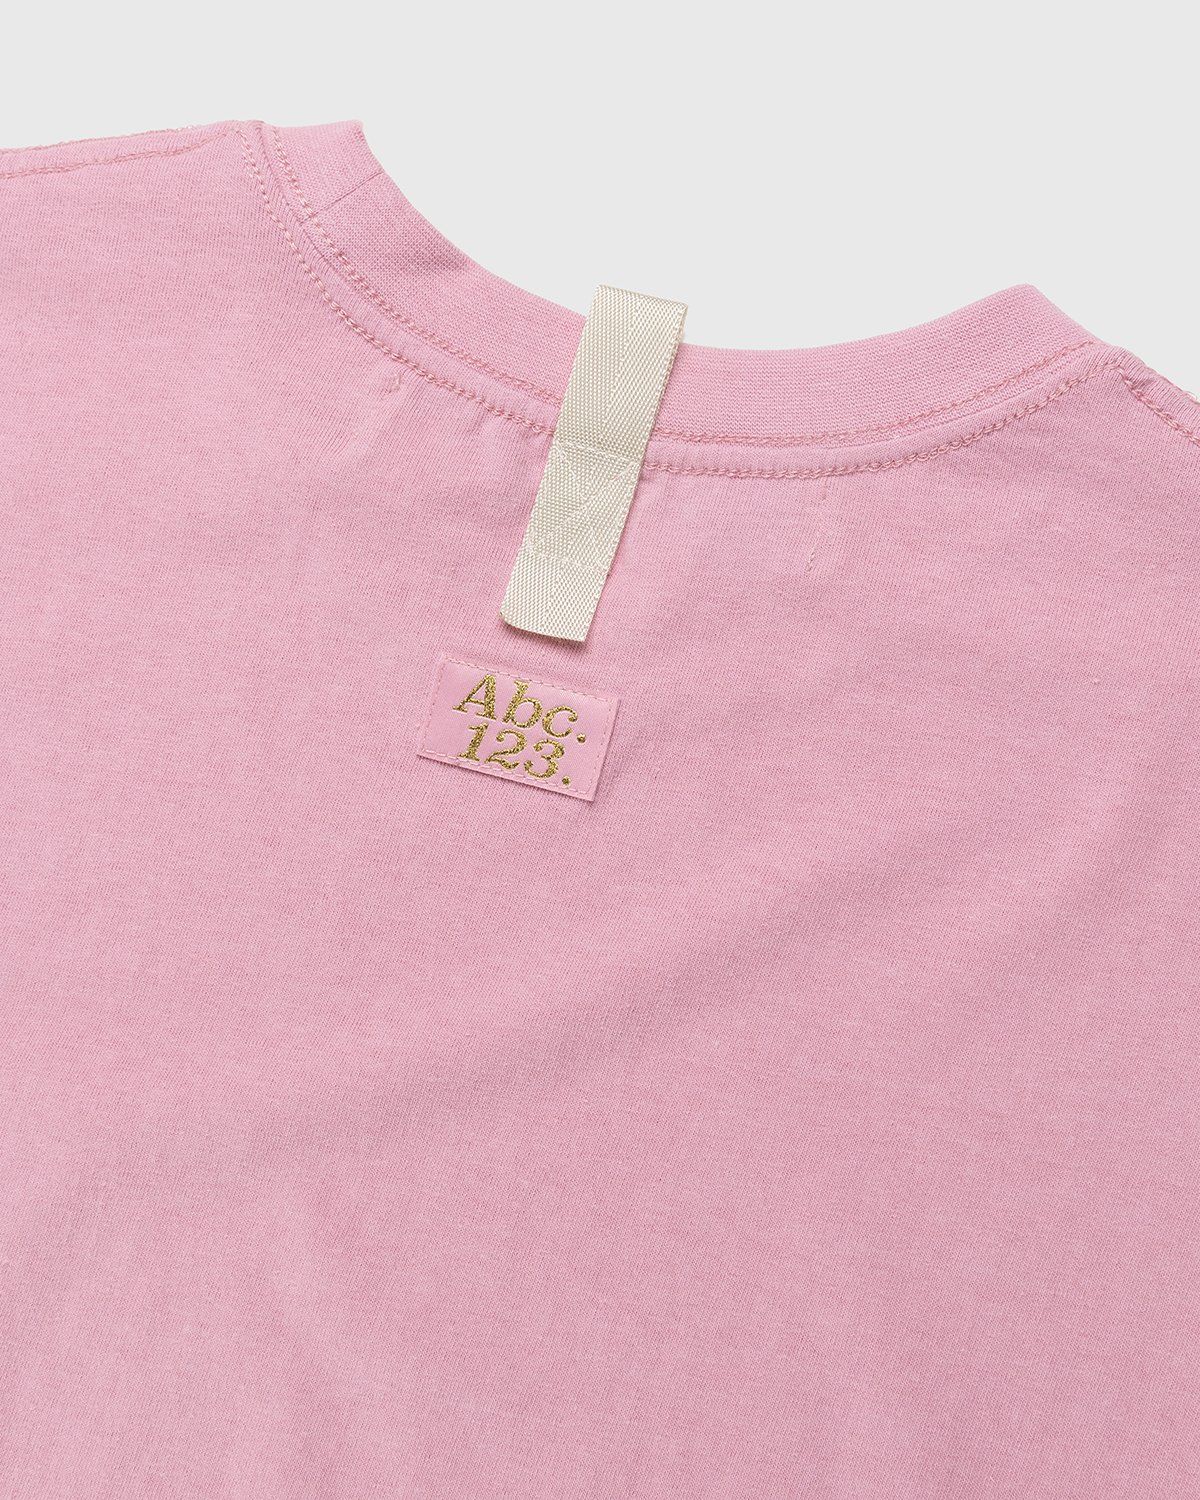 Abc. – Short-Sleeve Pocket Tee Morganite - Tops - Pink - Image 3